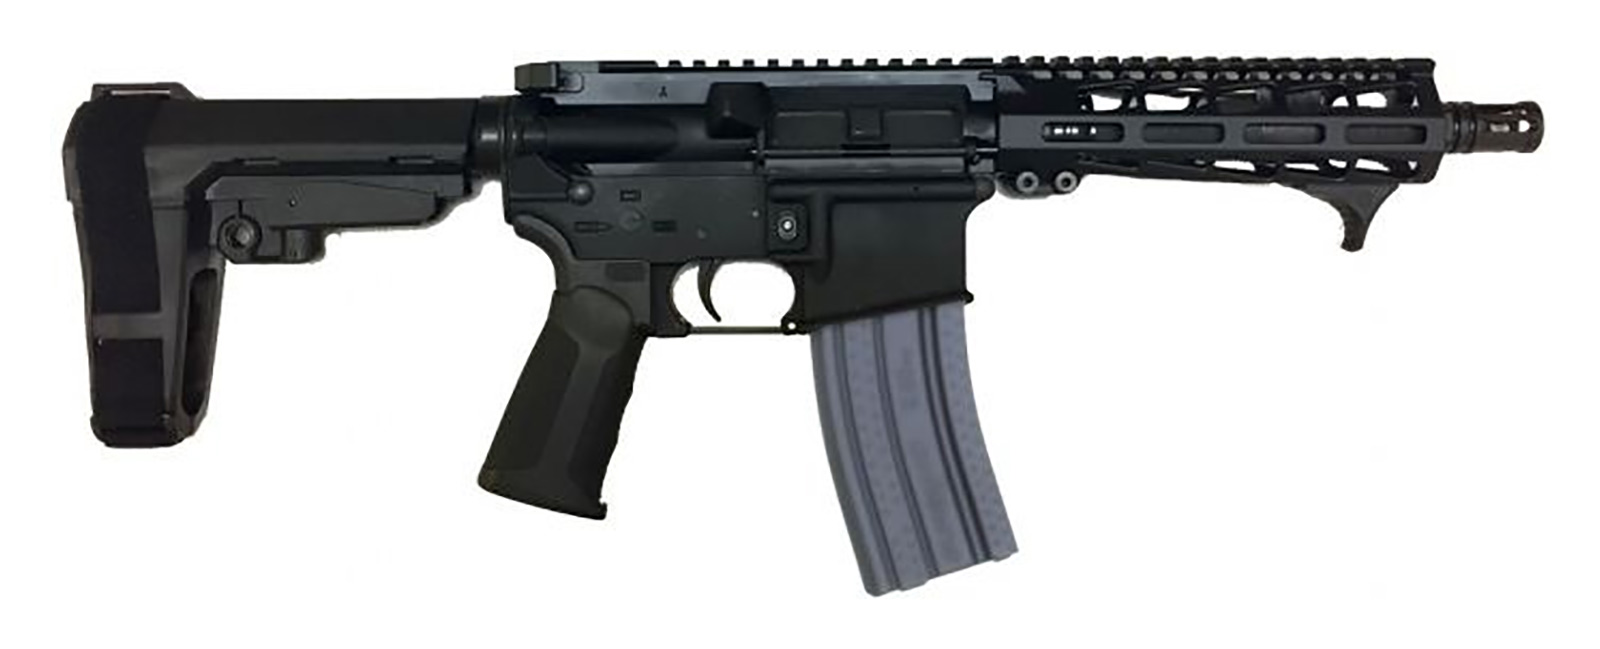 cbc-ps2-forged-aluminum-ar-pistol-300-aac-7-5-barrel-7-rail-xtech-grip-karve-p